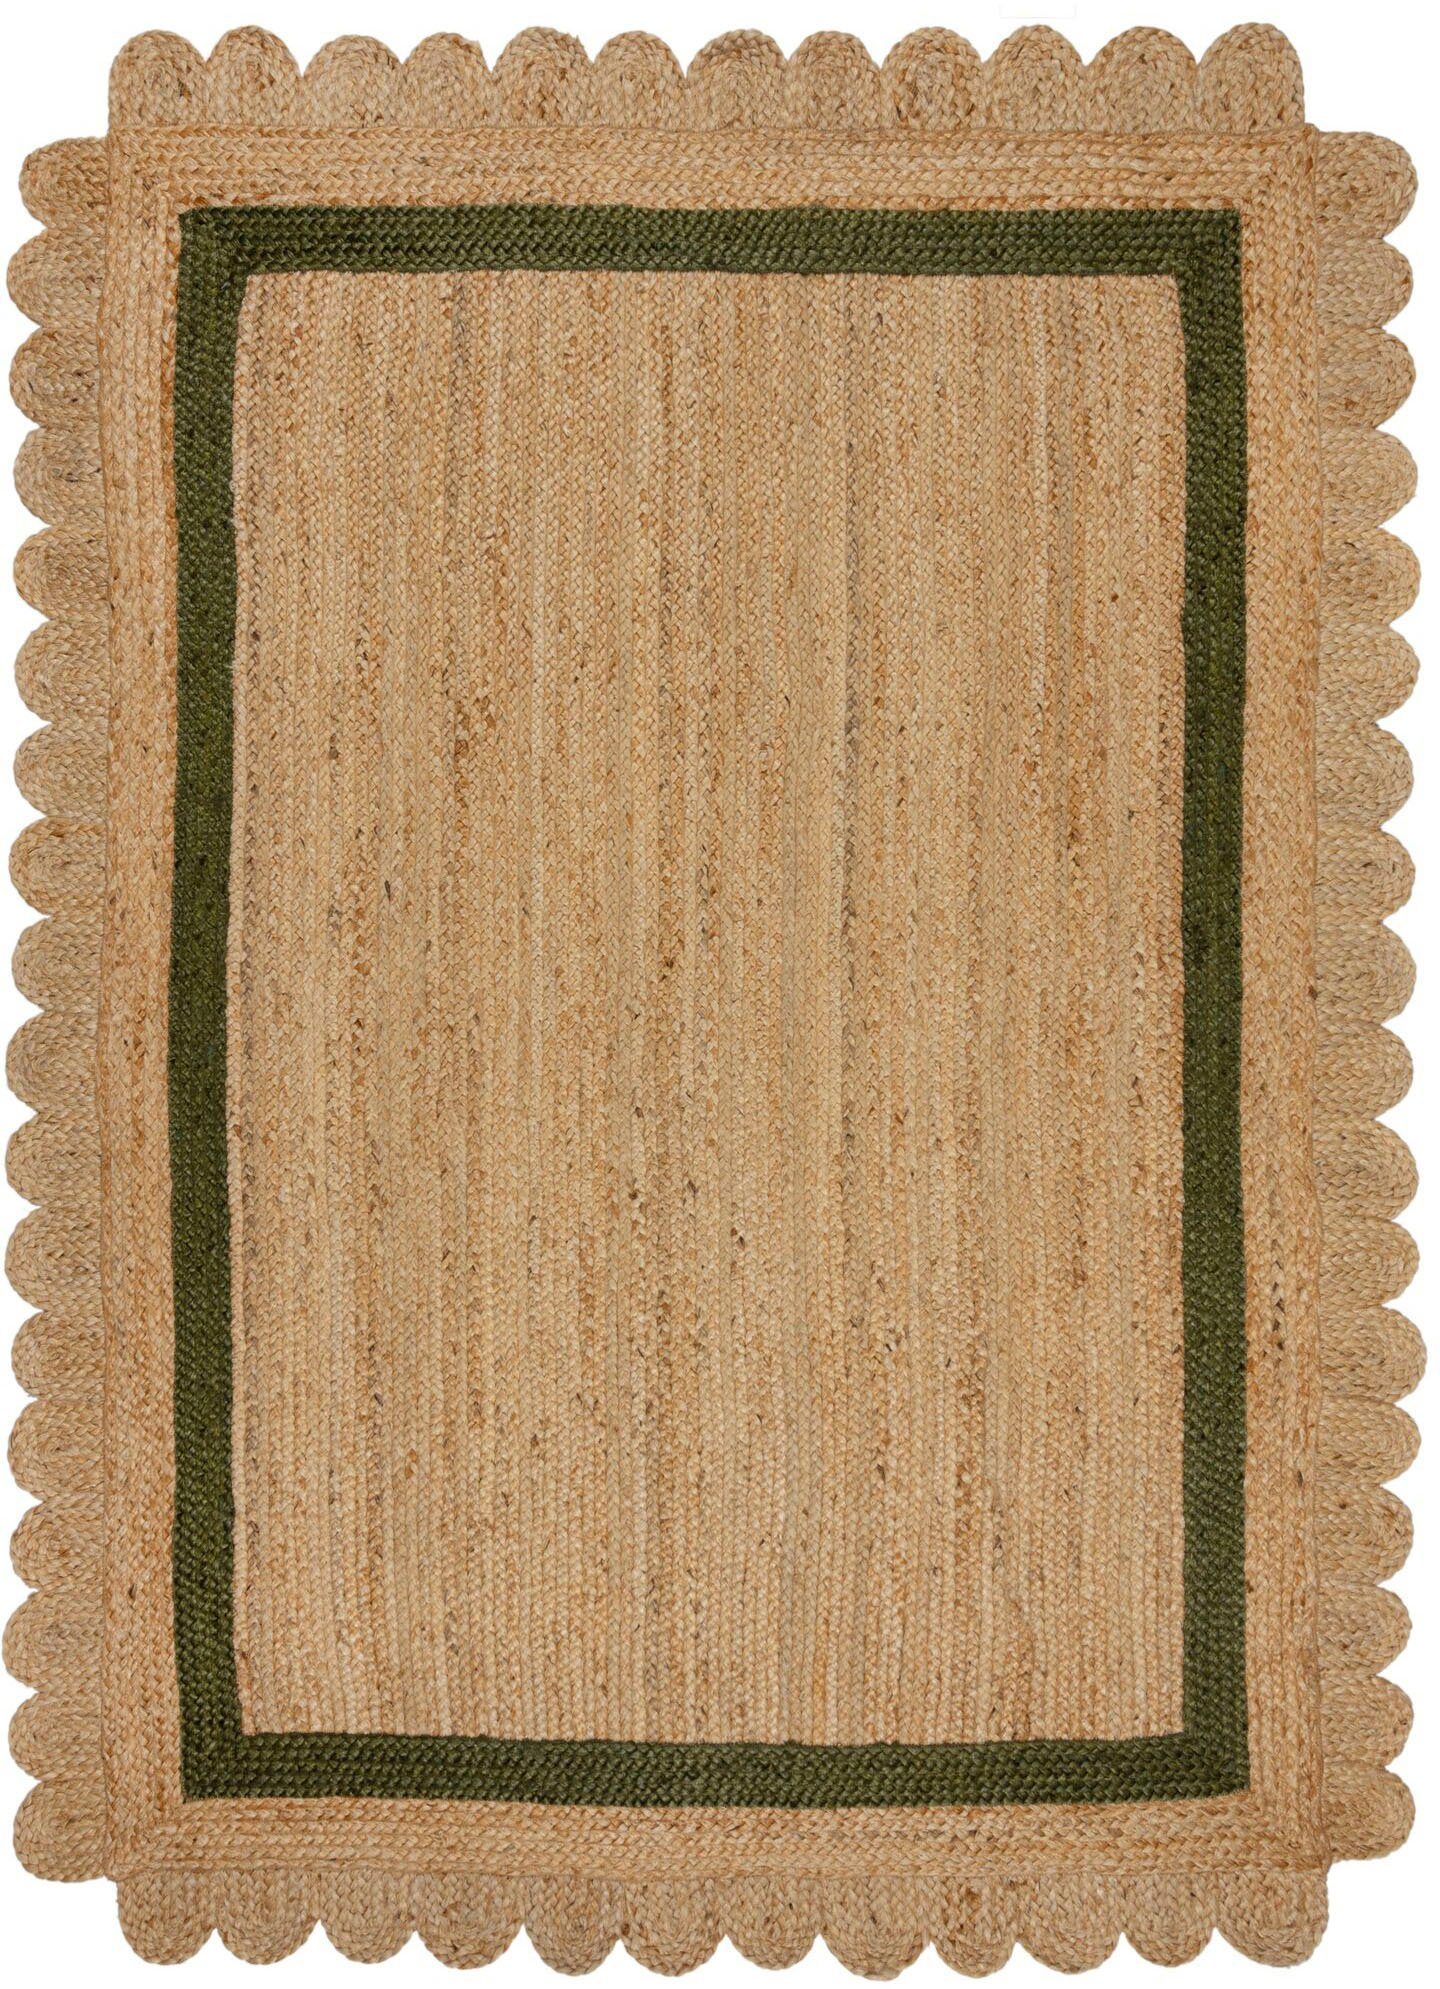 Supergünstiges Originalprodukt Teppich Grace, FLAIR RUGS, aus Höhe: 7 mm, Grün mit fußbodenheizungsgeeignet, 100% rechteckig, Bordüre Jute